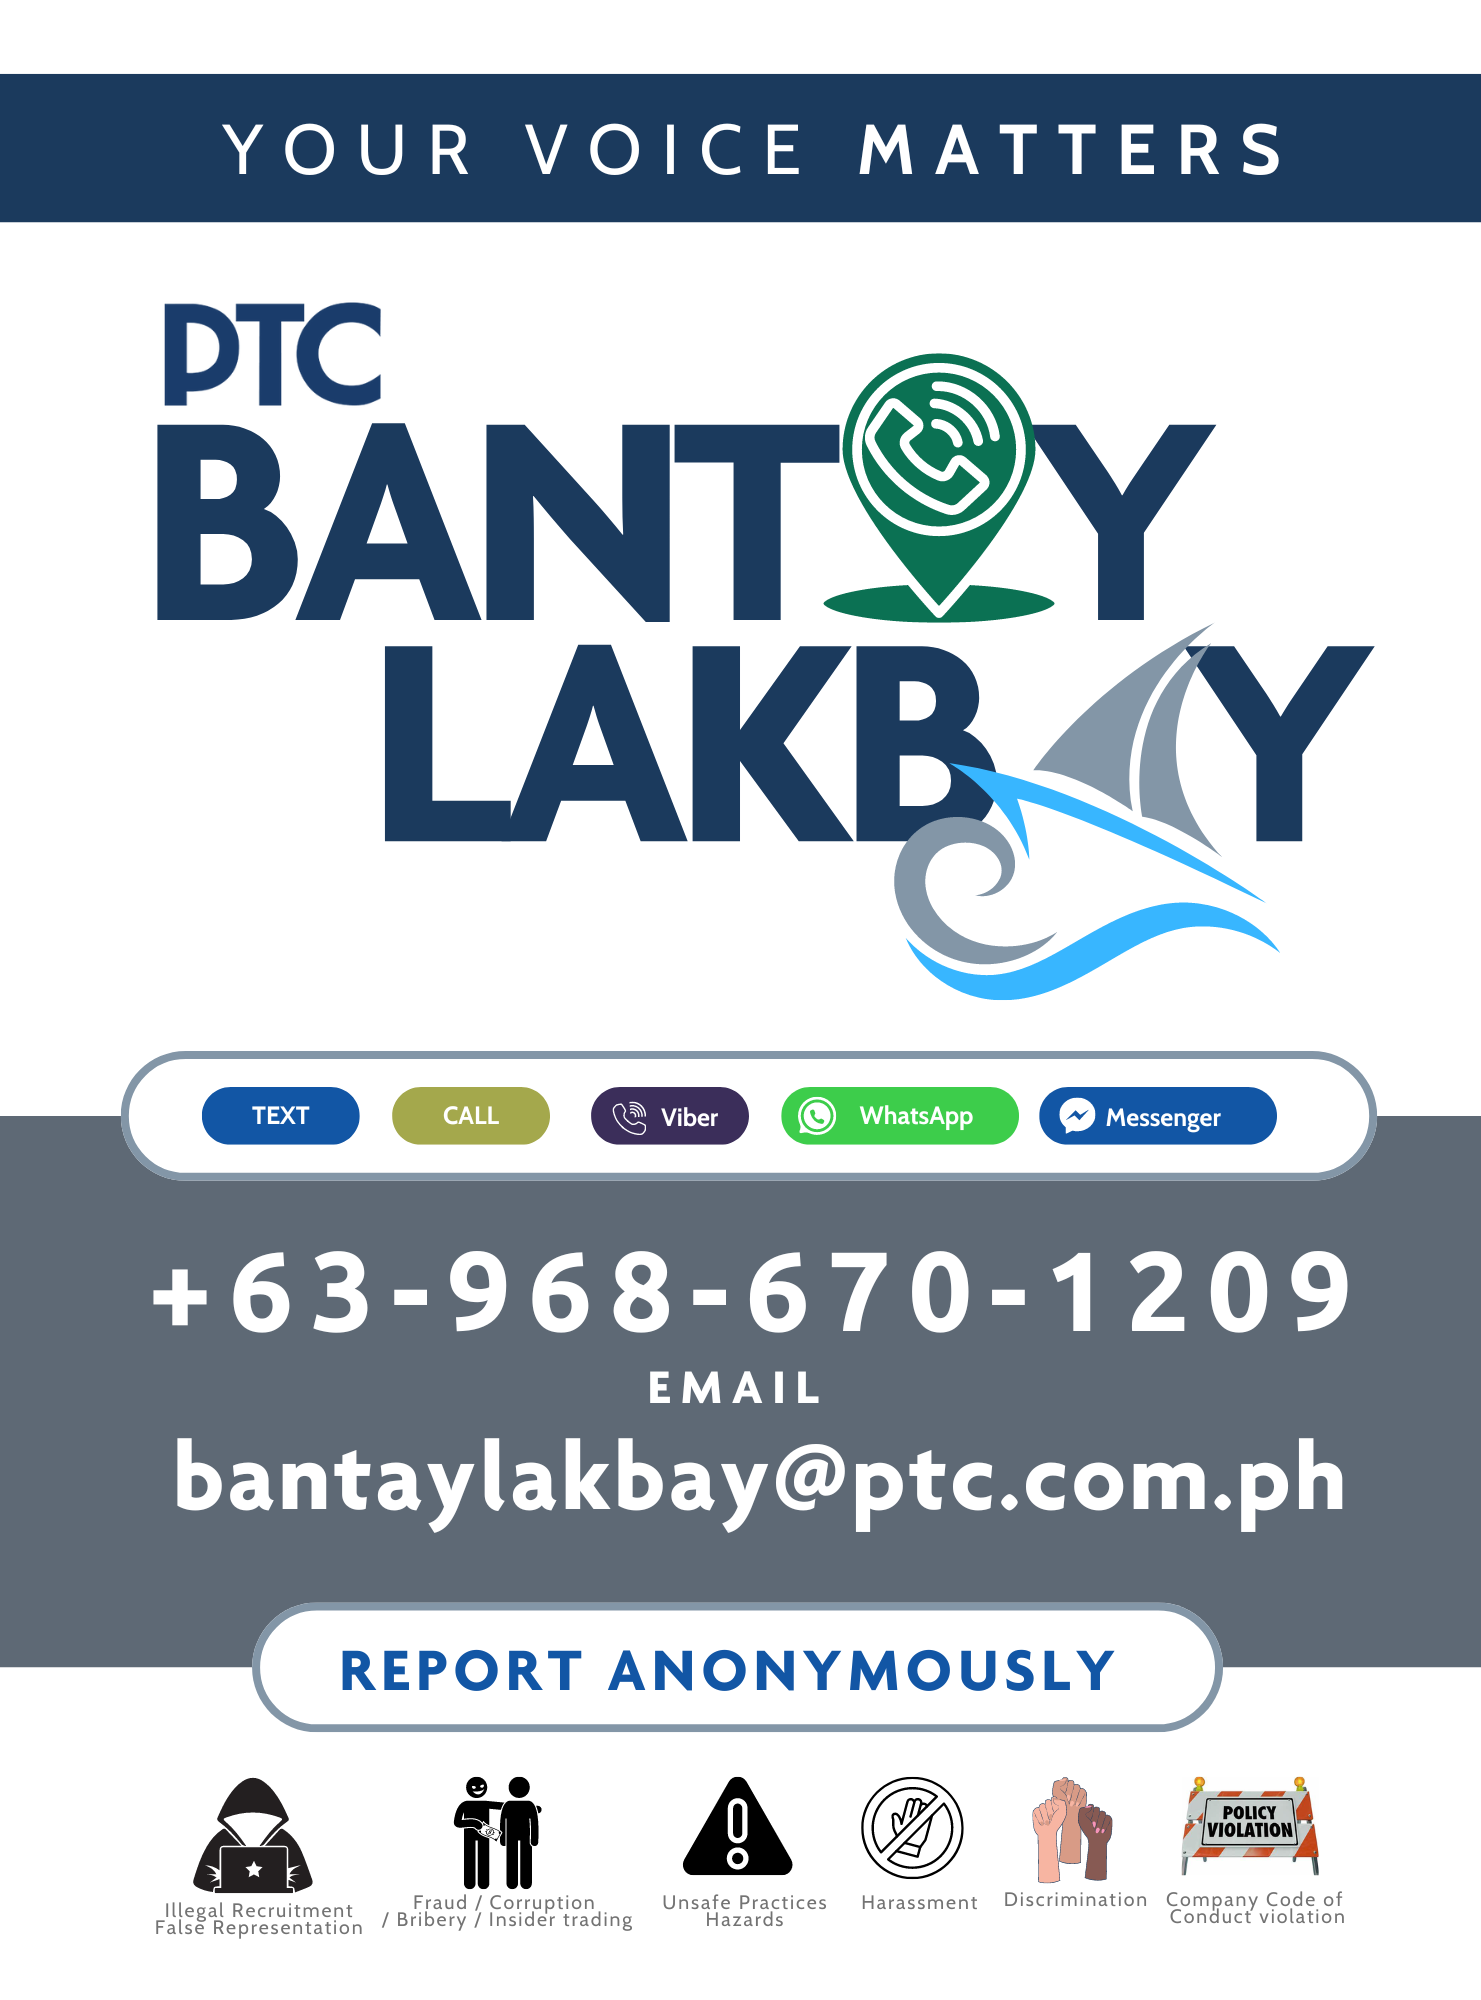 PTC Bantay Lakbay